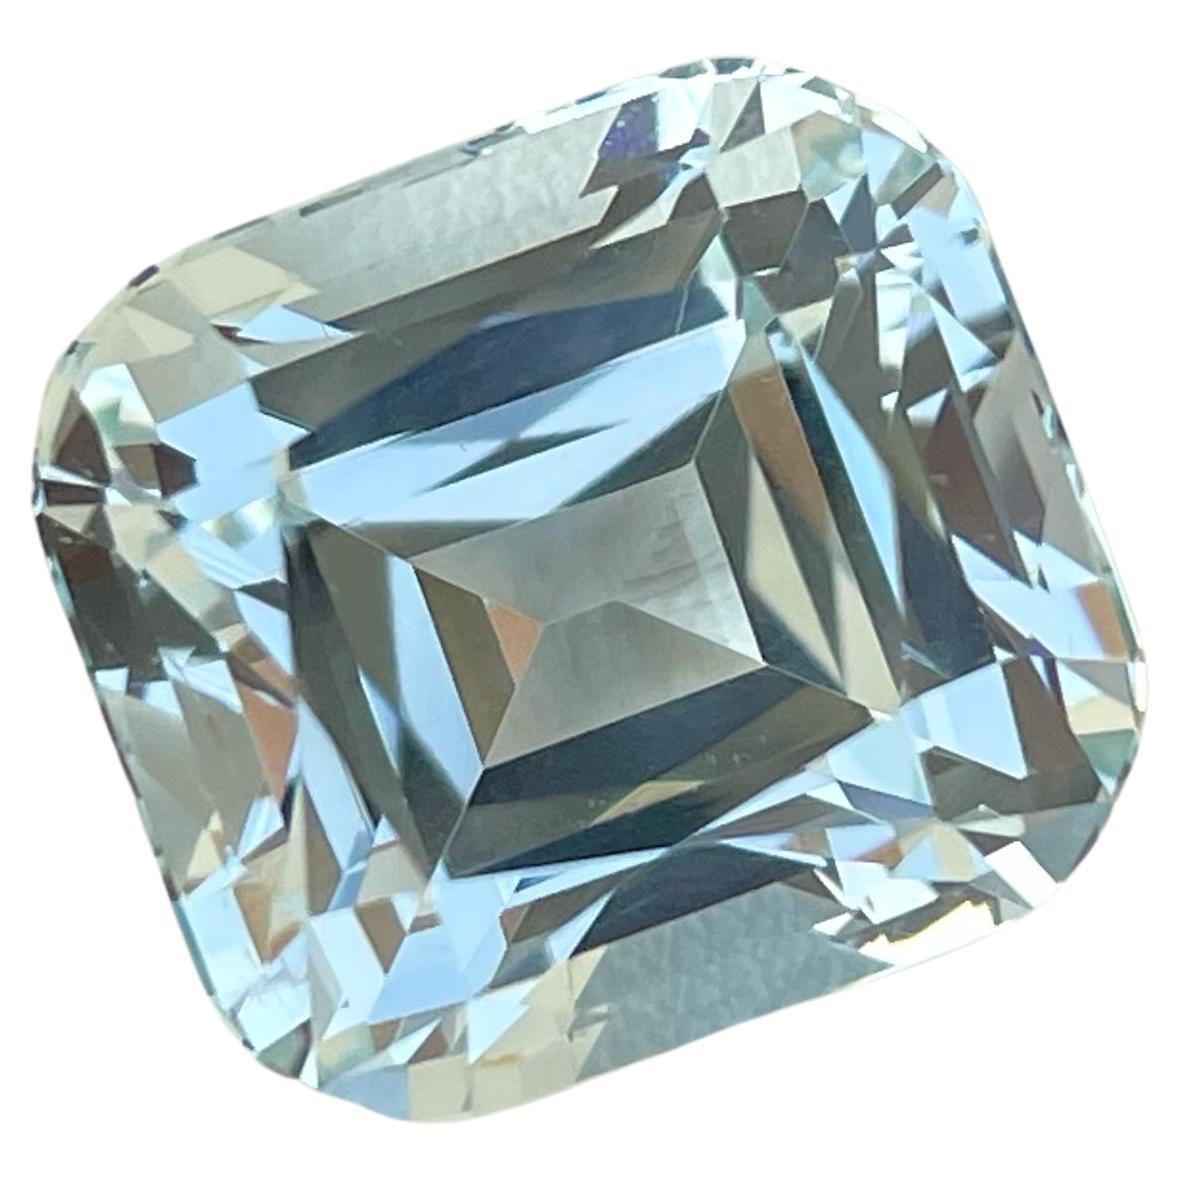 AAA Quality Aquamarine Gemstone, 17.15 Carats, Loose Aquamarine for Jewelry